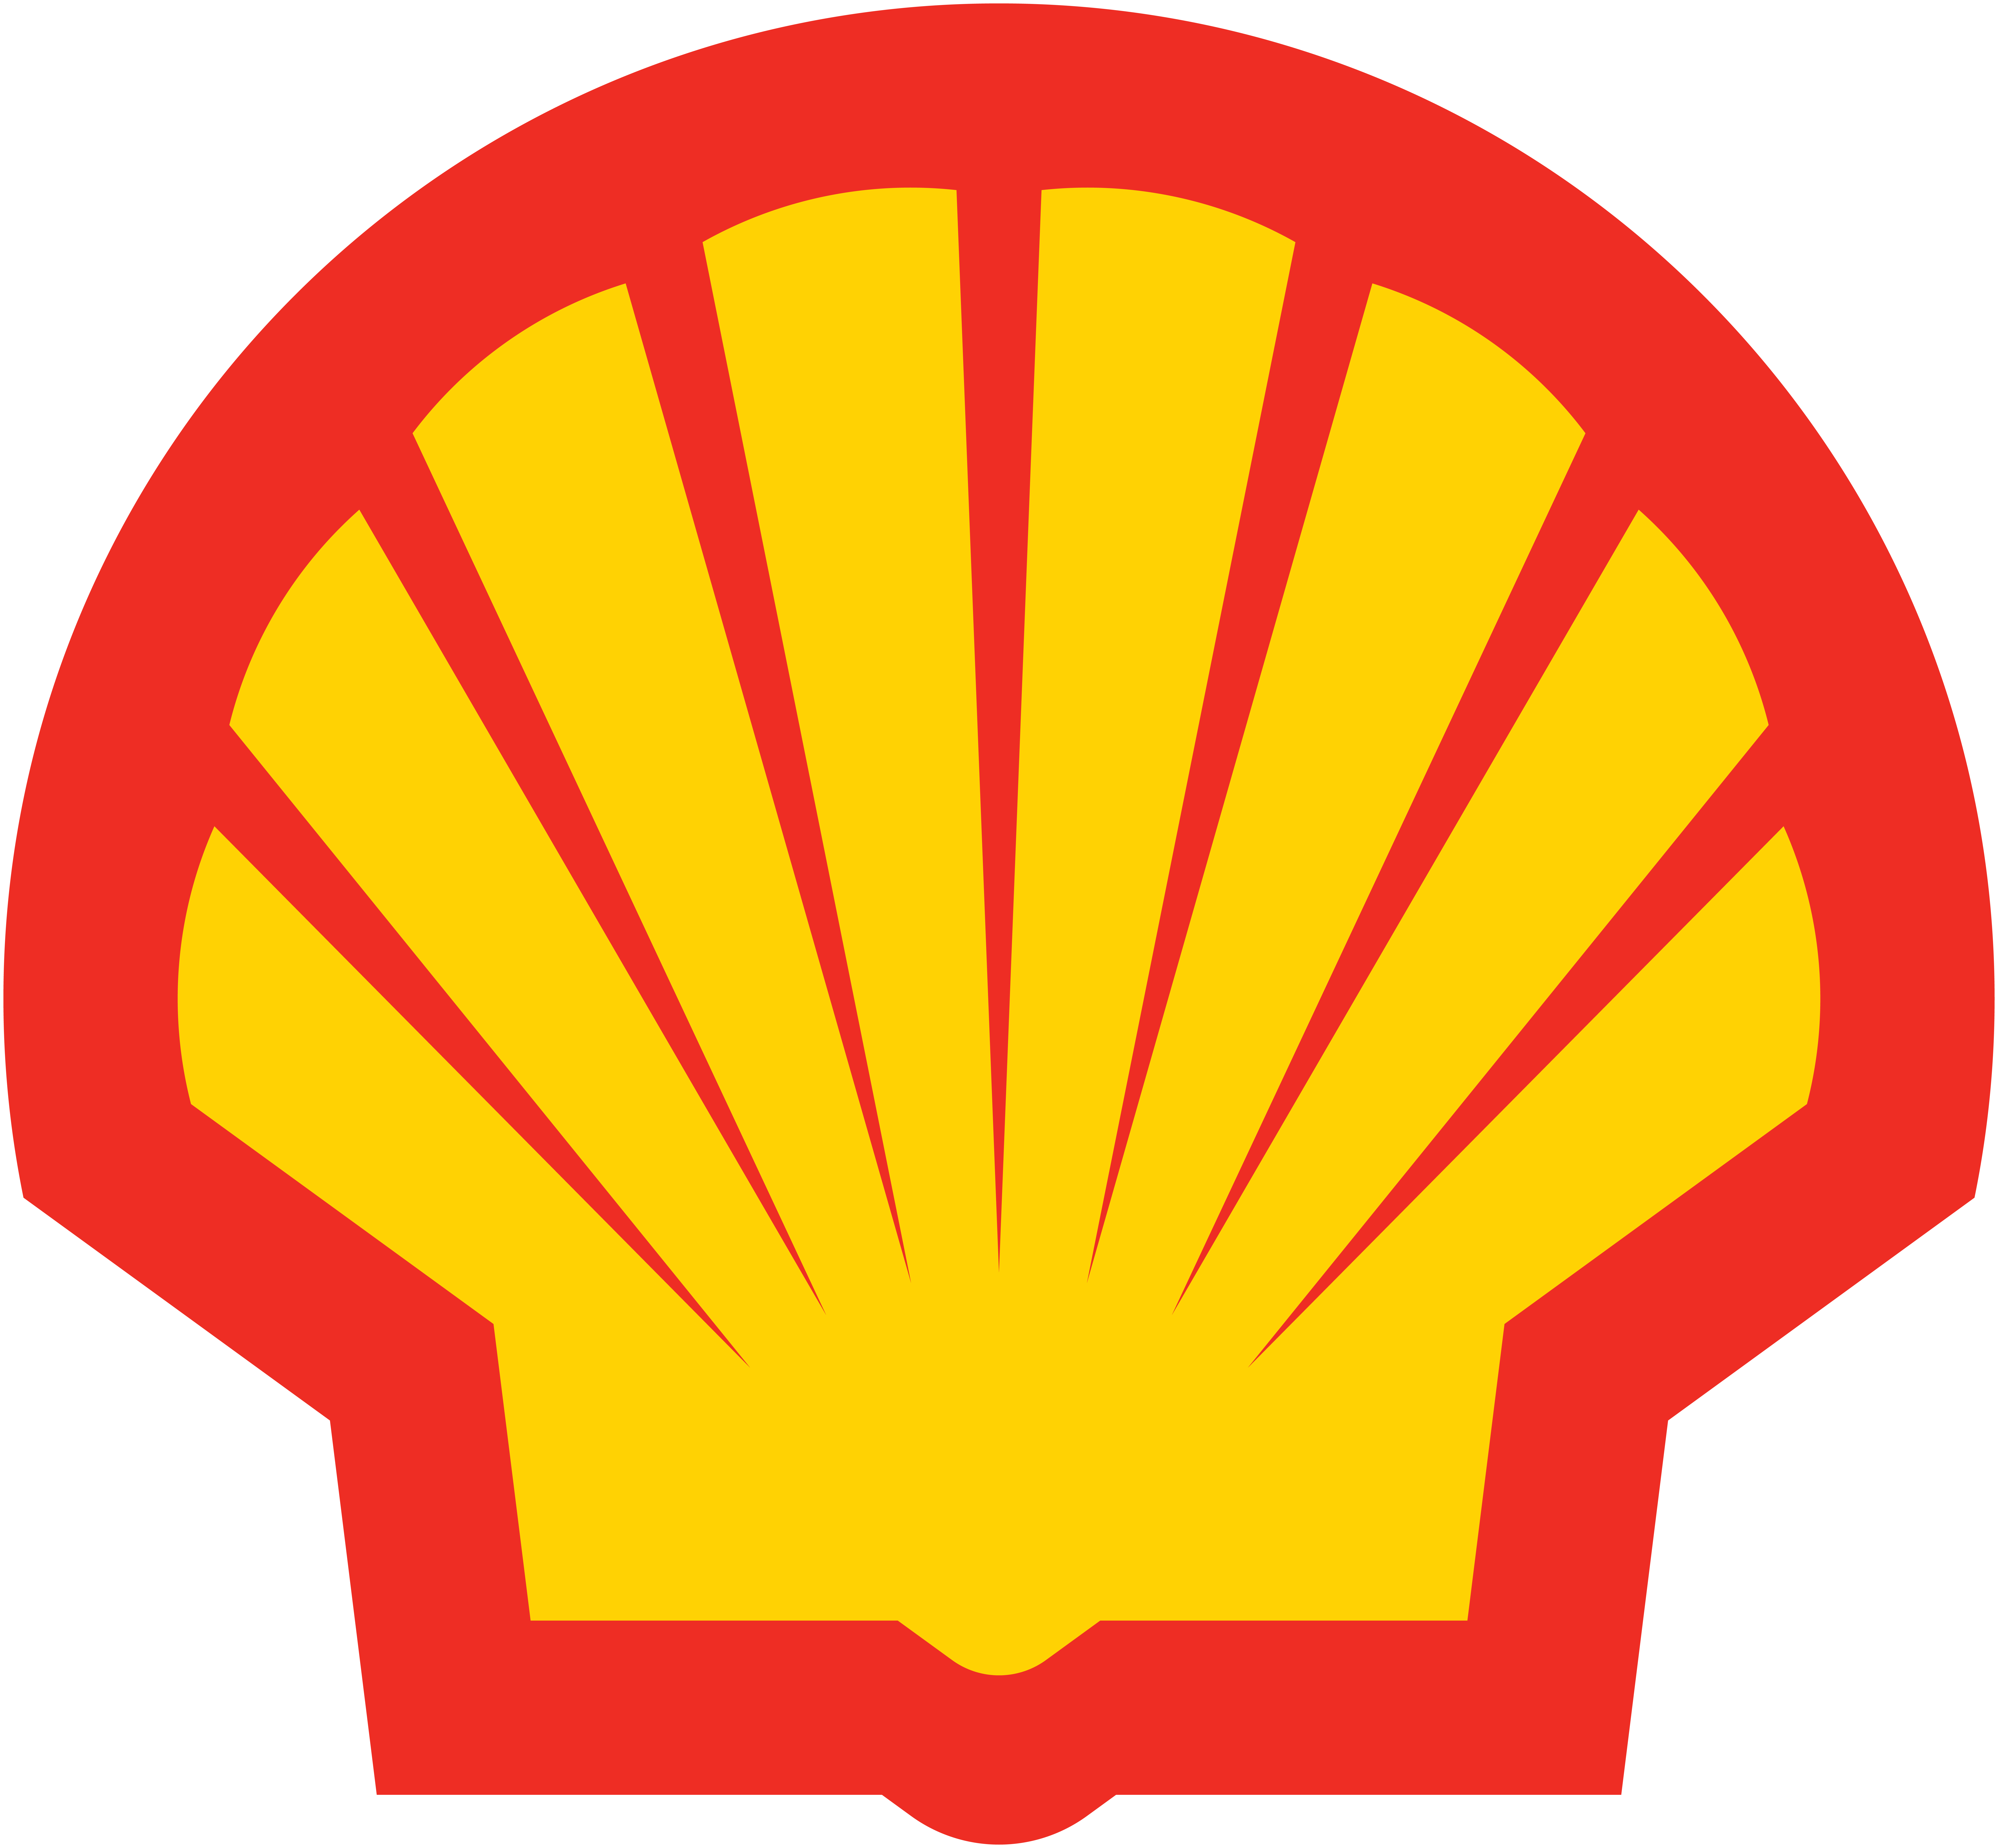 Shell UK Ltd